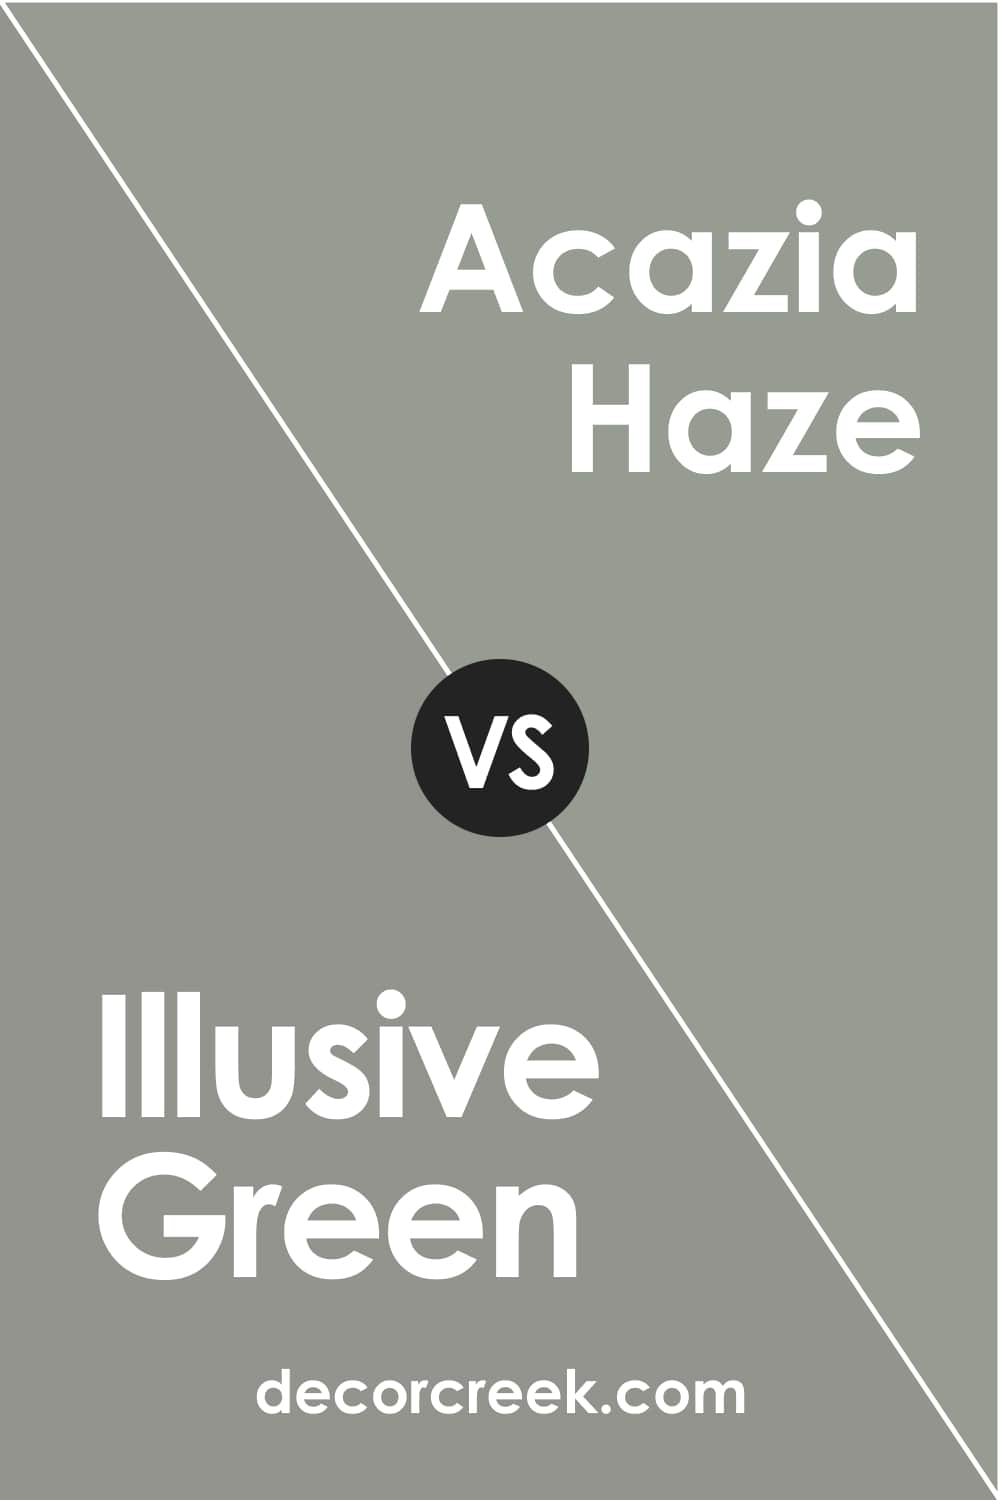 Illusive Green vs Acazia Haze